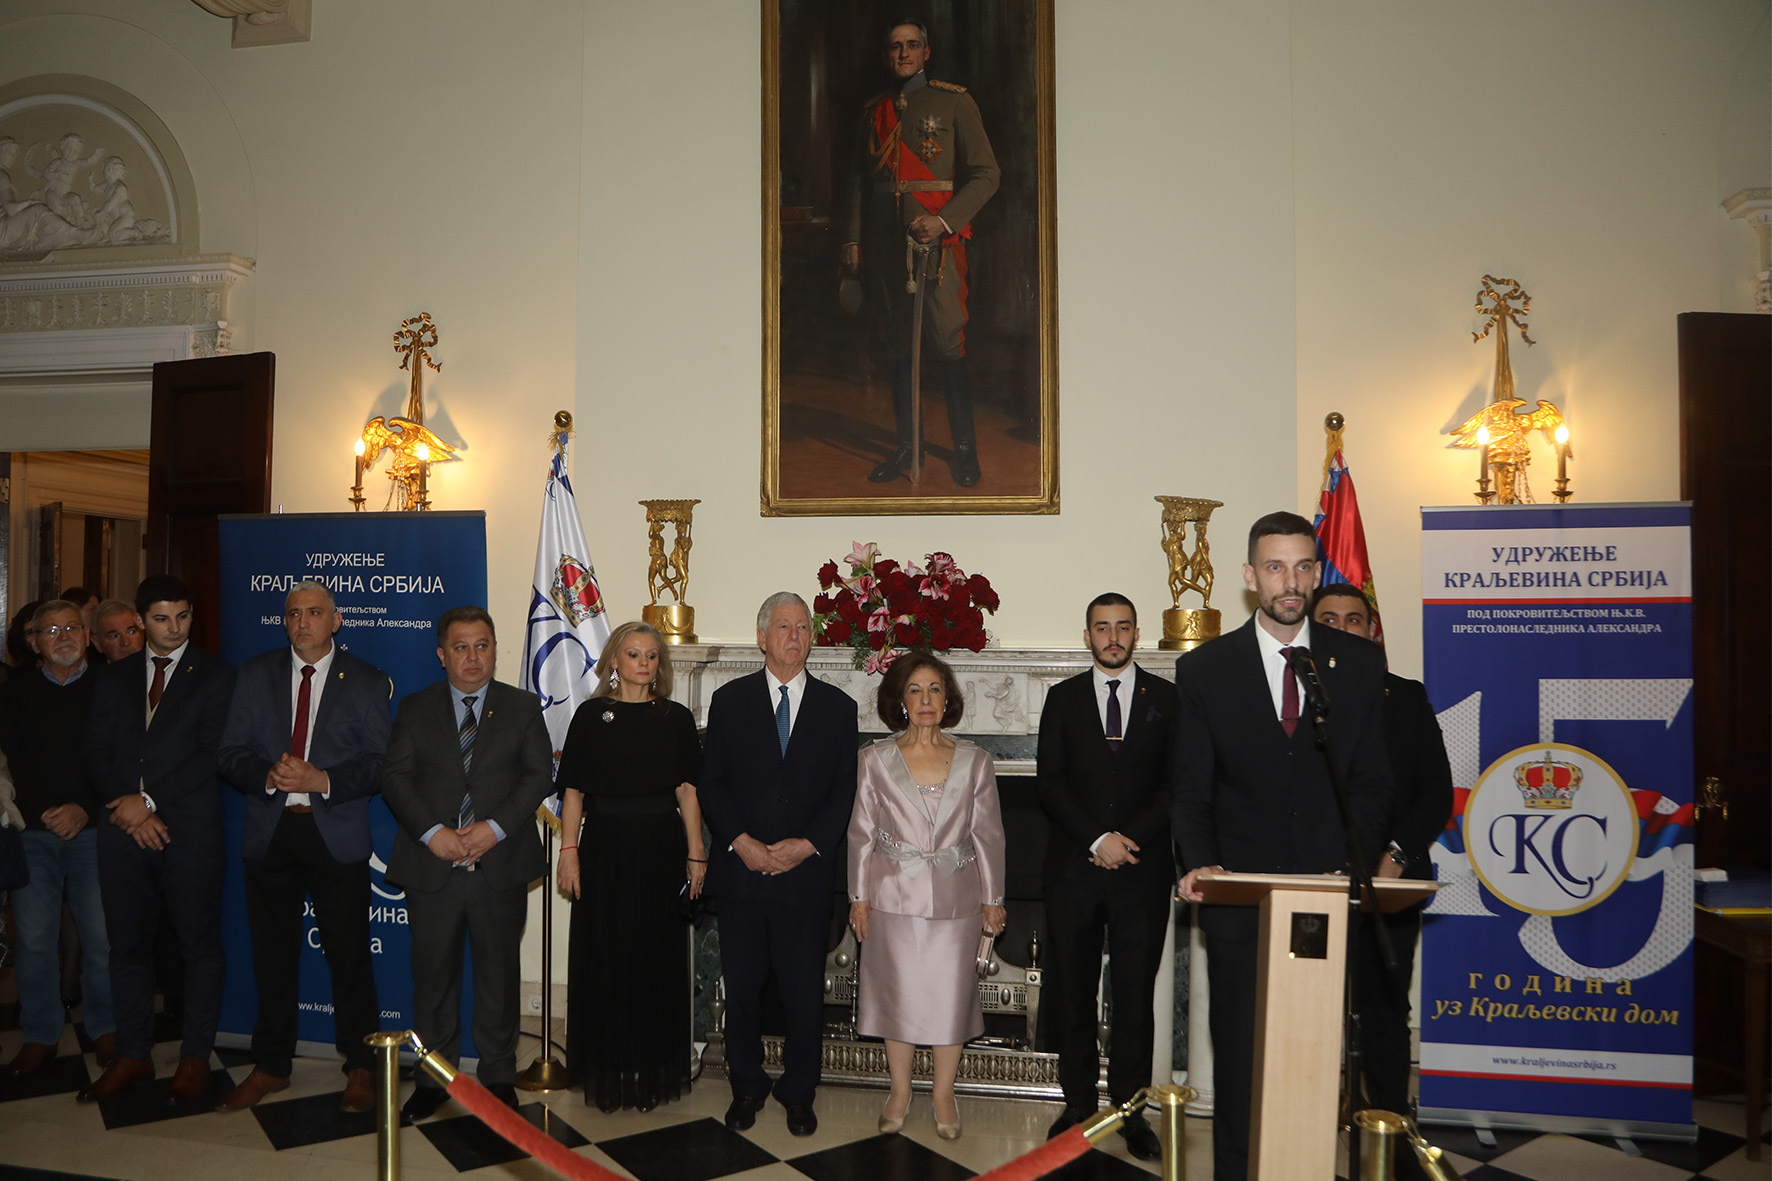 KINGDOM OF SERBIA ASSOCIATION CELEBRATES 15thANNIVERSARY AT THE WHITE PALACE